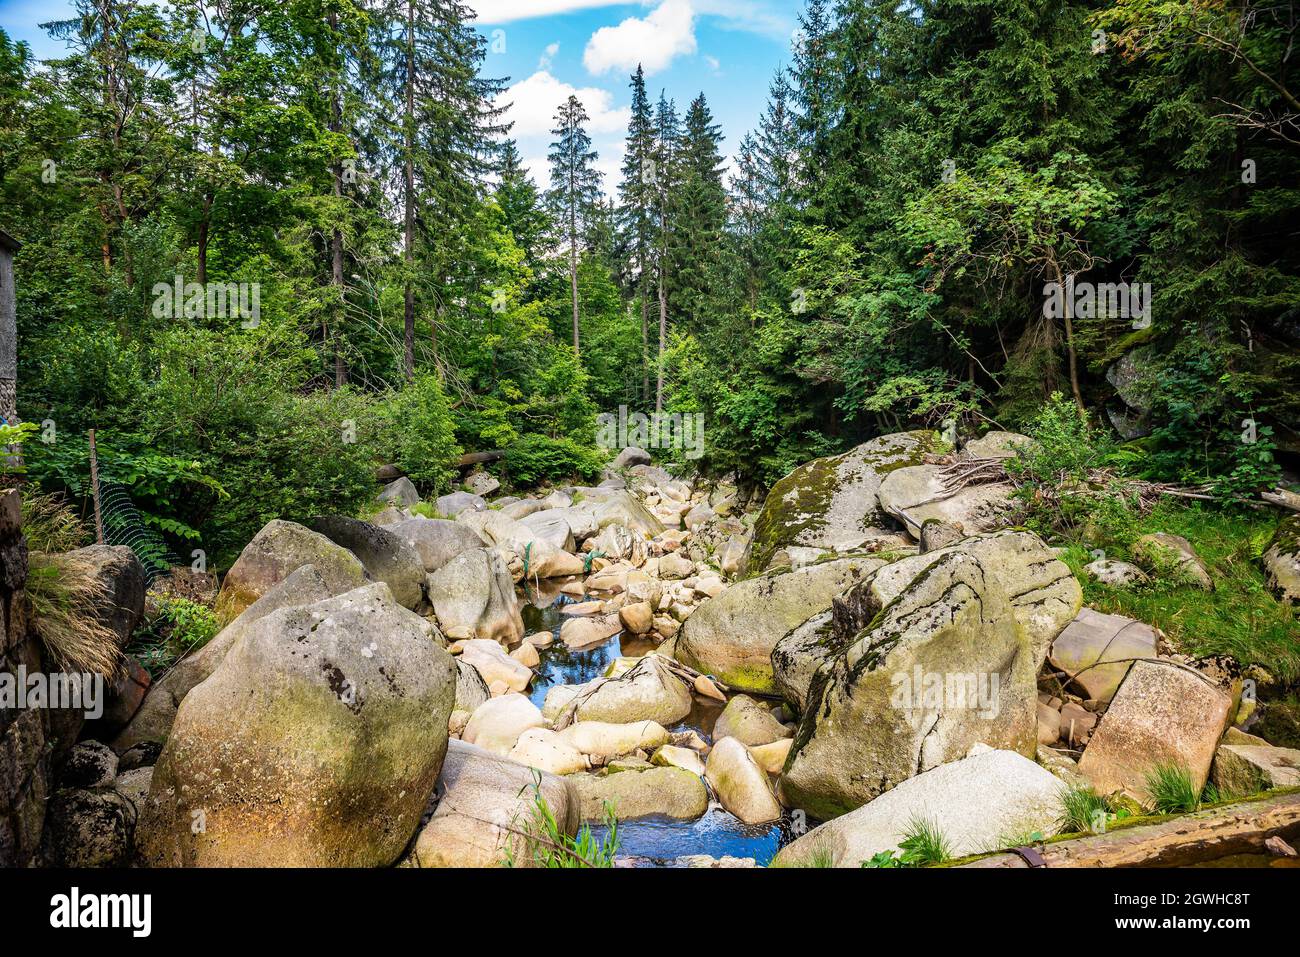 Krucze skaly-rocks in Giant Mountains  in Summer in Szklarska Poreba Stock Photo